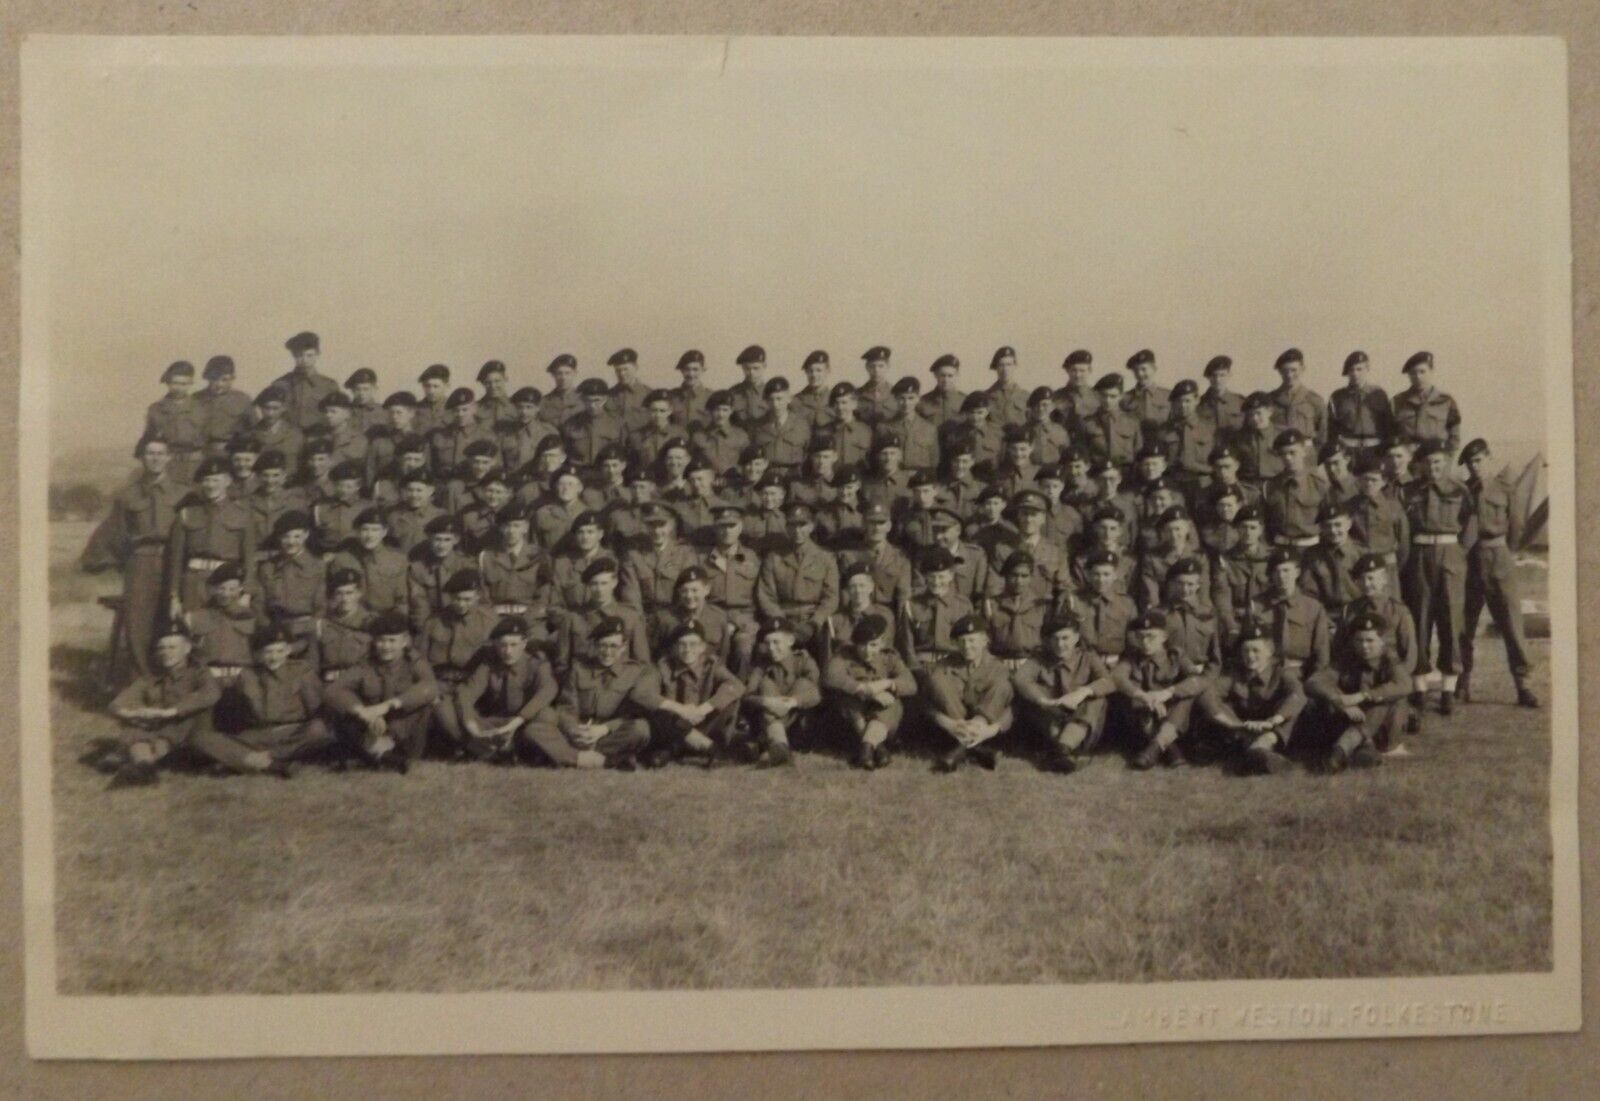 1953. Berkhamsted School CCF Camp Photograph, Original.